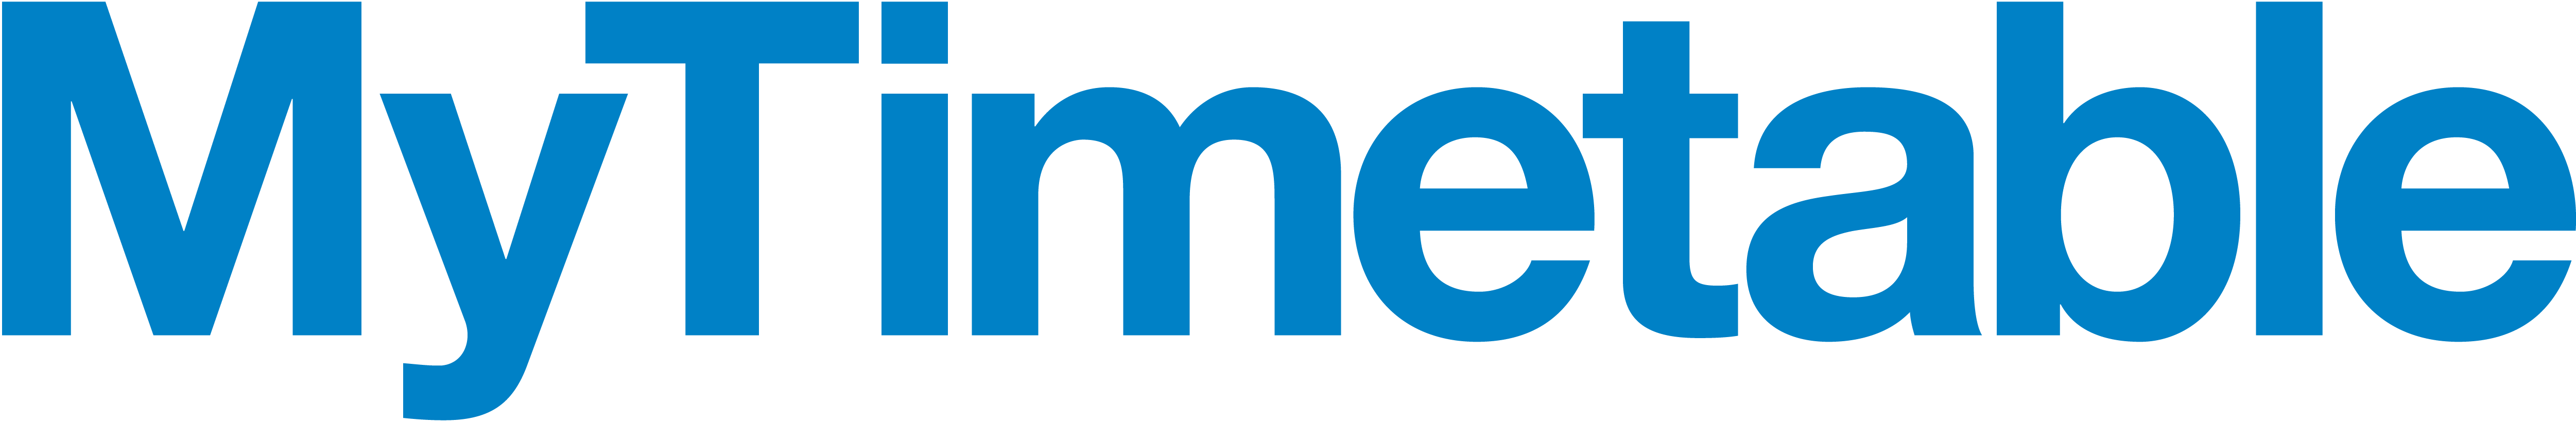 MyTimetable API (logo)